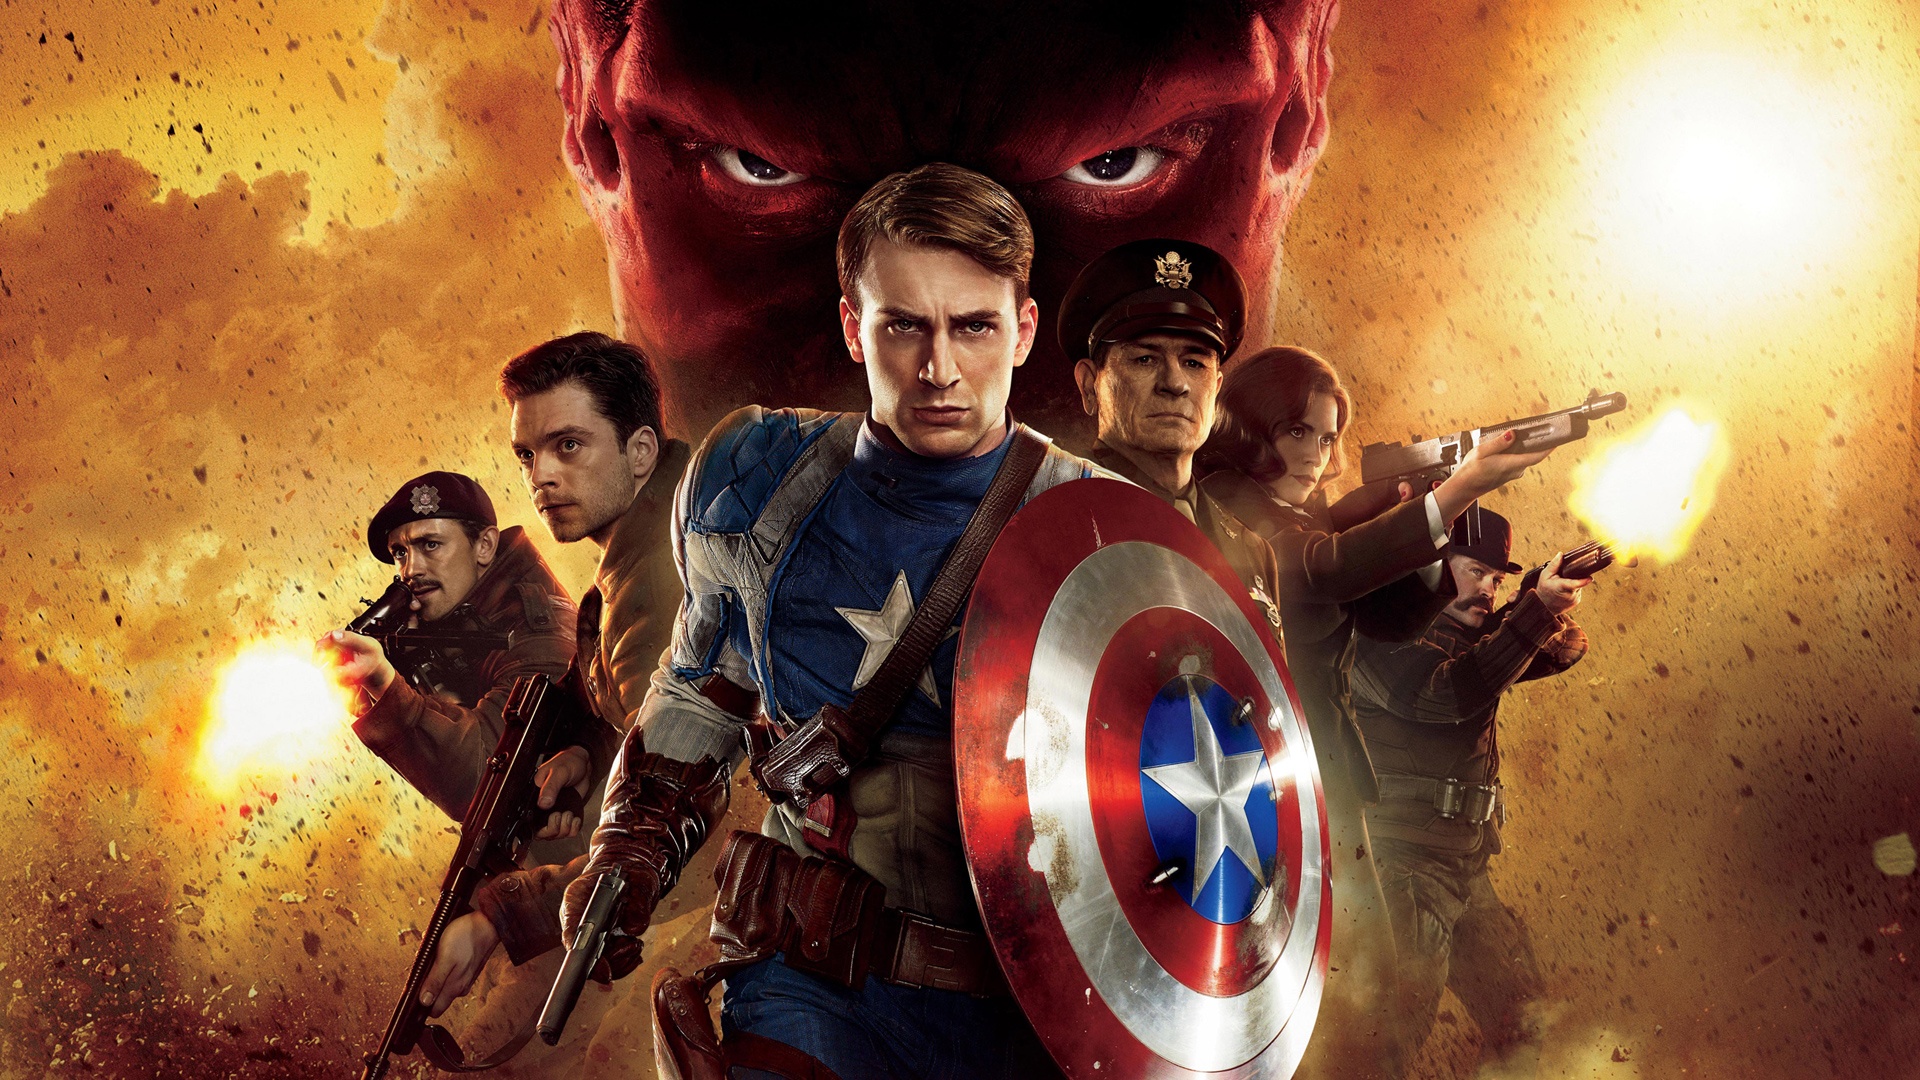 Popular Captain America: The First Avenger Image for Phone